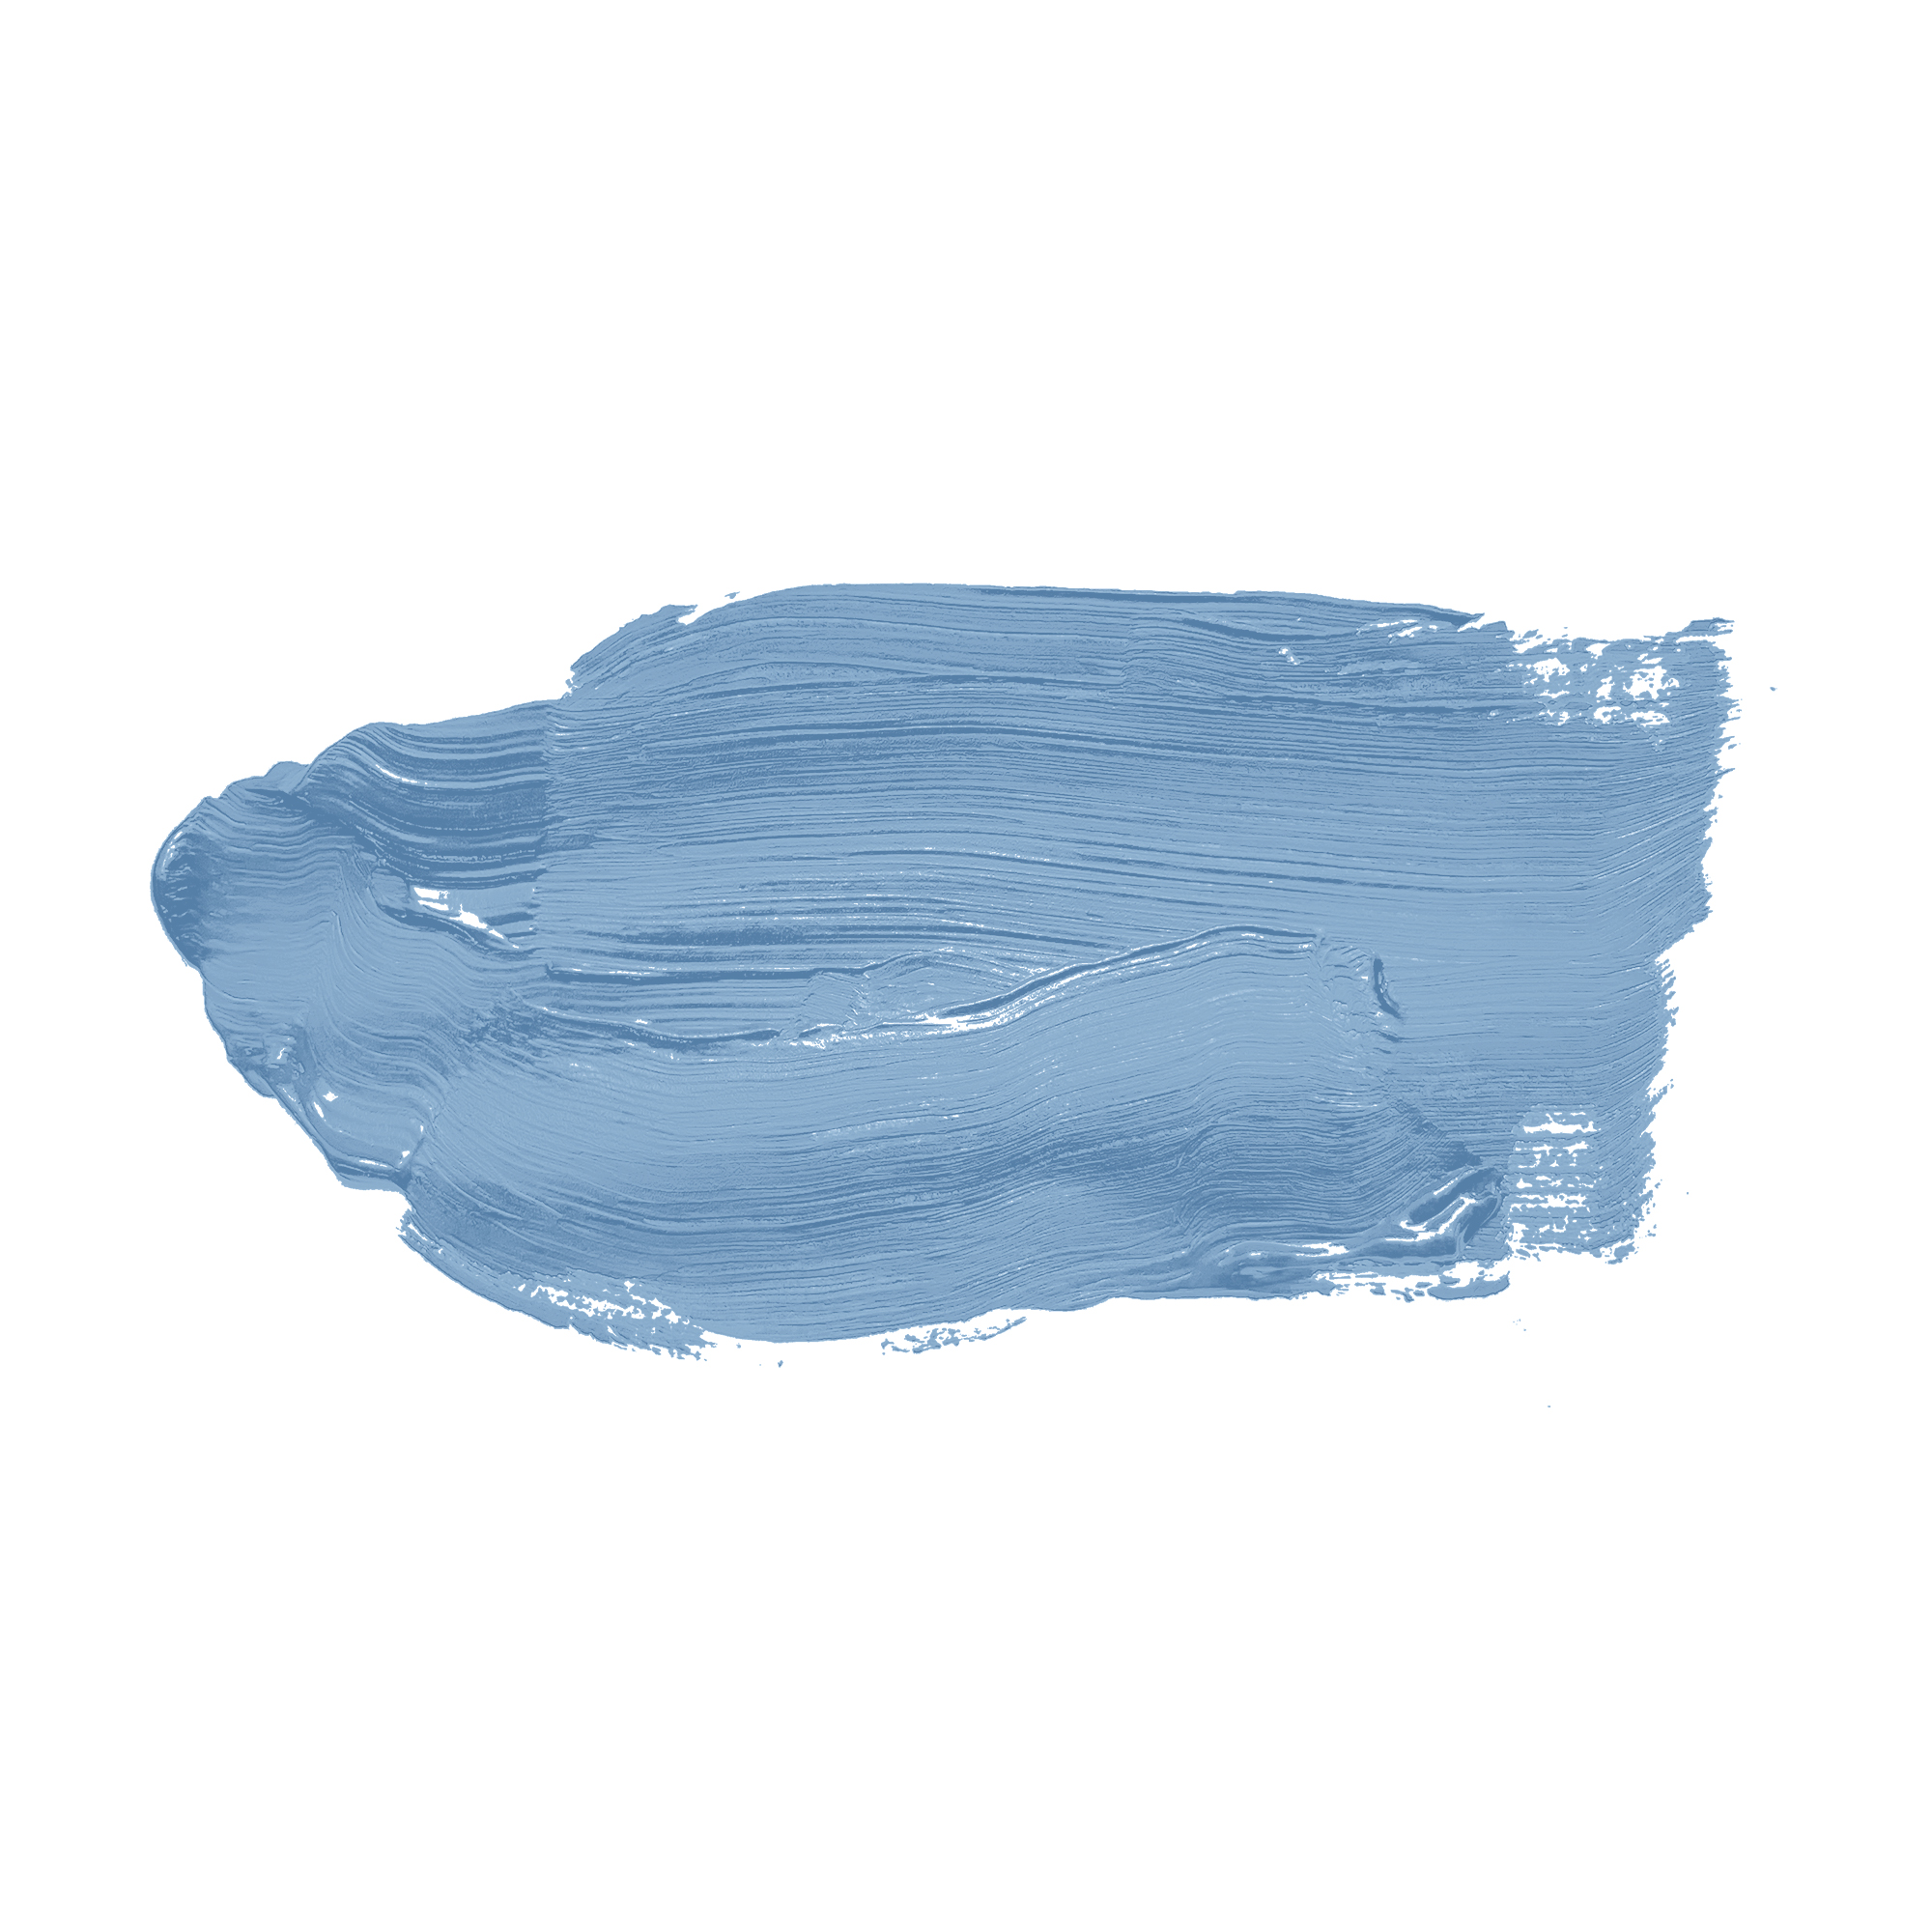 The Color Kitchen Blue Herring 5 l